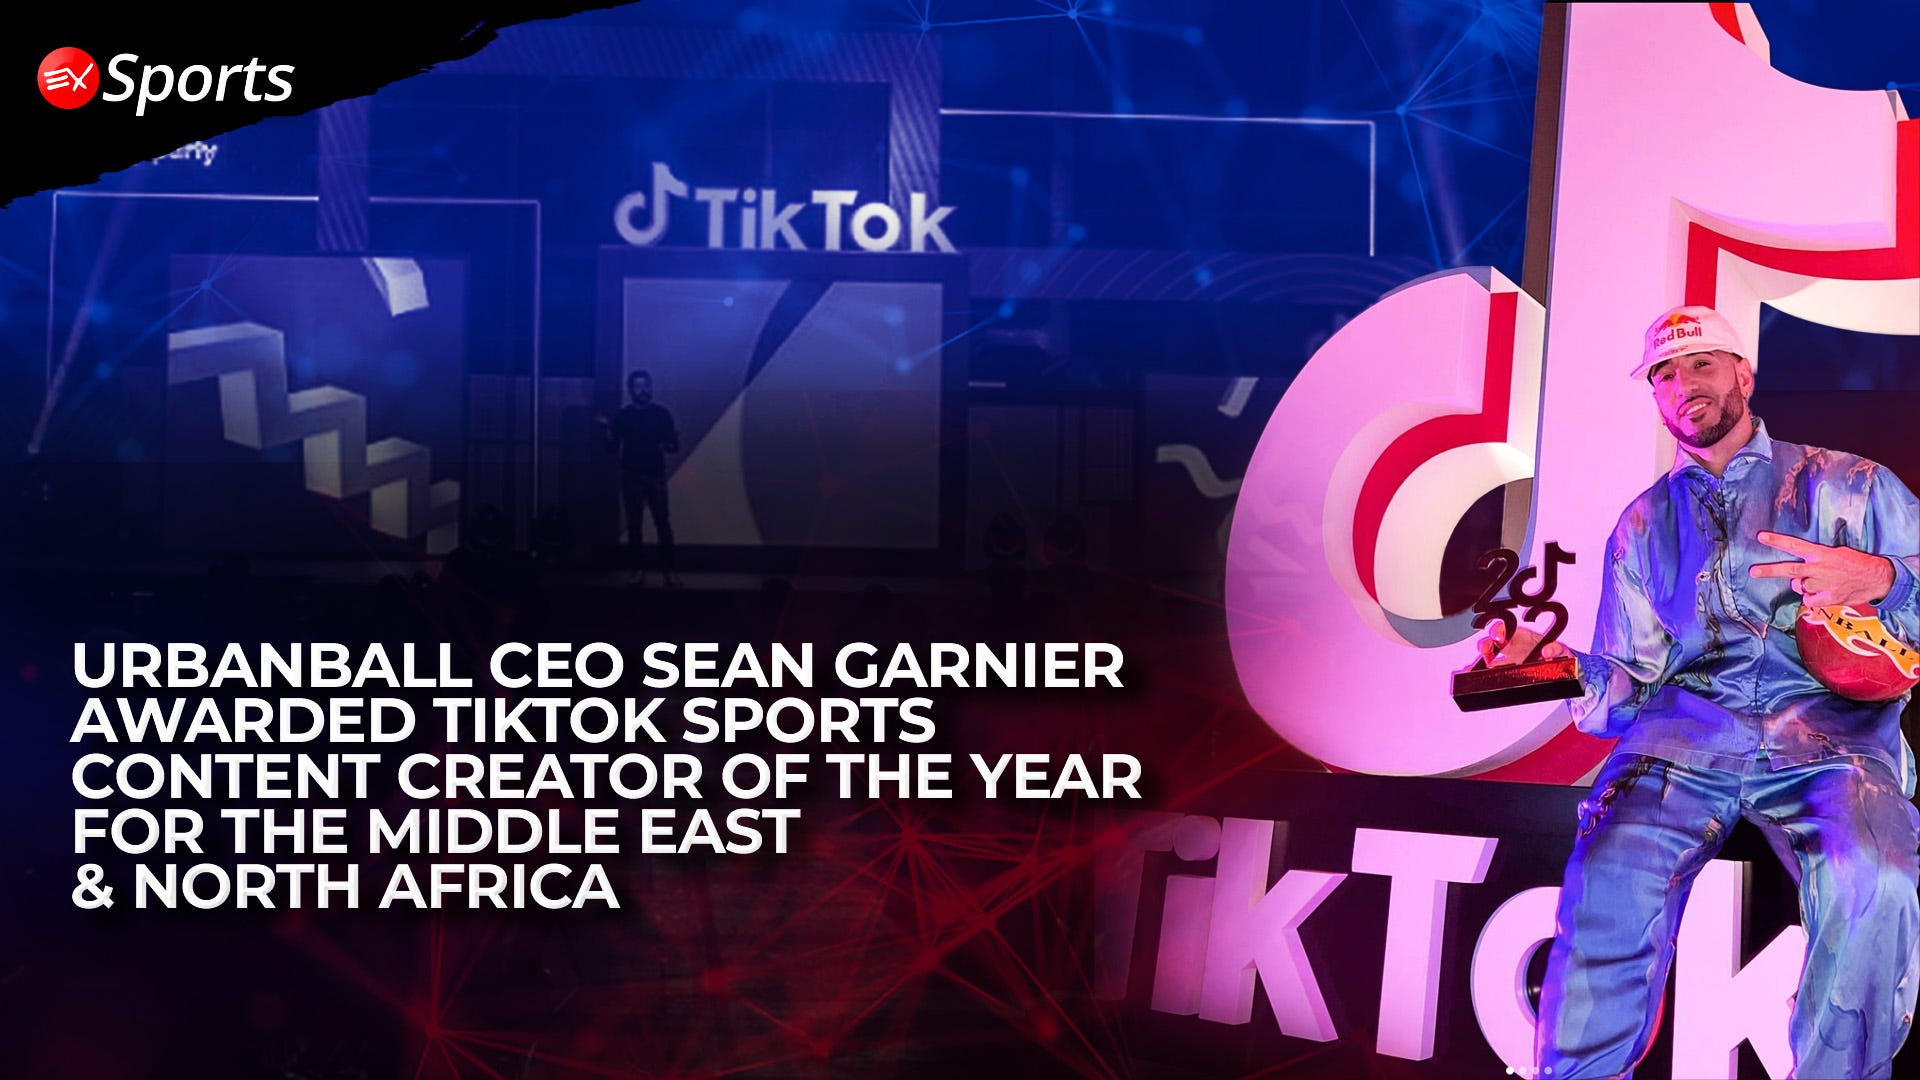 EX SPORTS PARTNER AND URBANBALL CEO SEAN GARNIER AWARDED TIKTOK SPORTS CONTENT CREATOR OF THE YEAR…